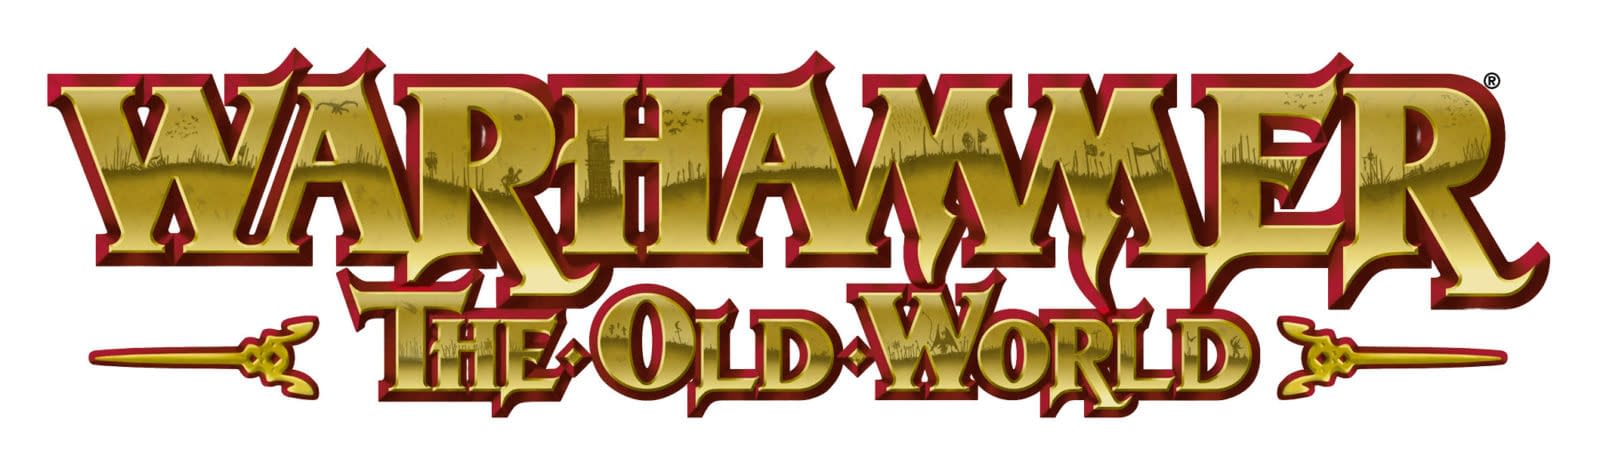 "Warhammer" News: Games Workshop Bringing Back Classic Setting